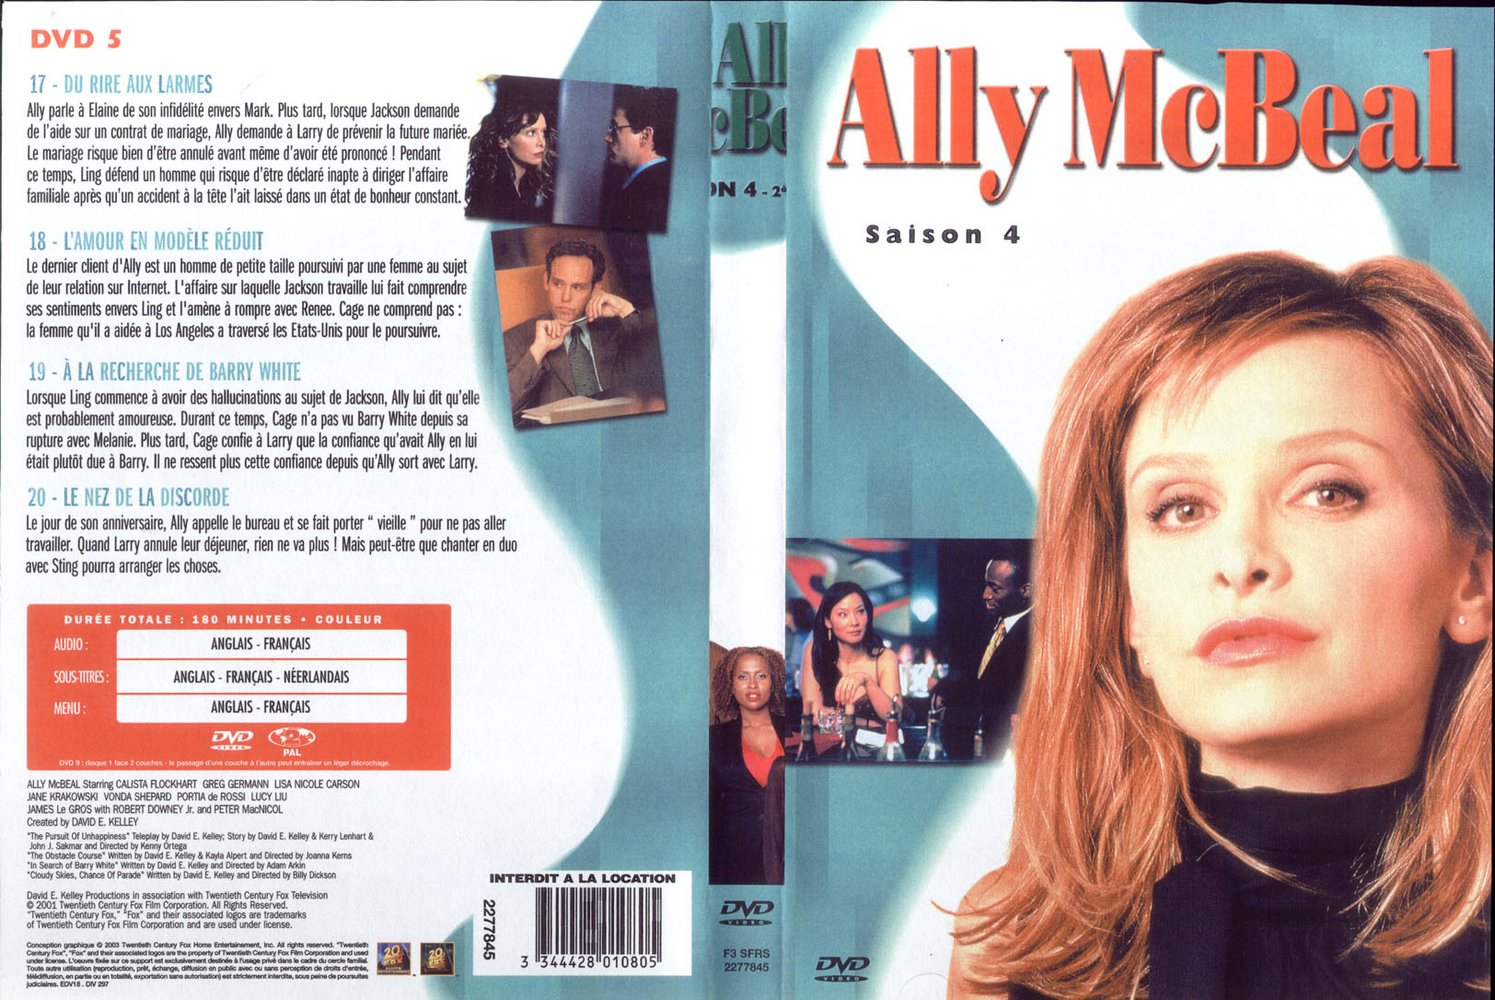 Jaquette DVD Ally McBeal saison 4 dvd 5